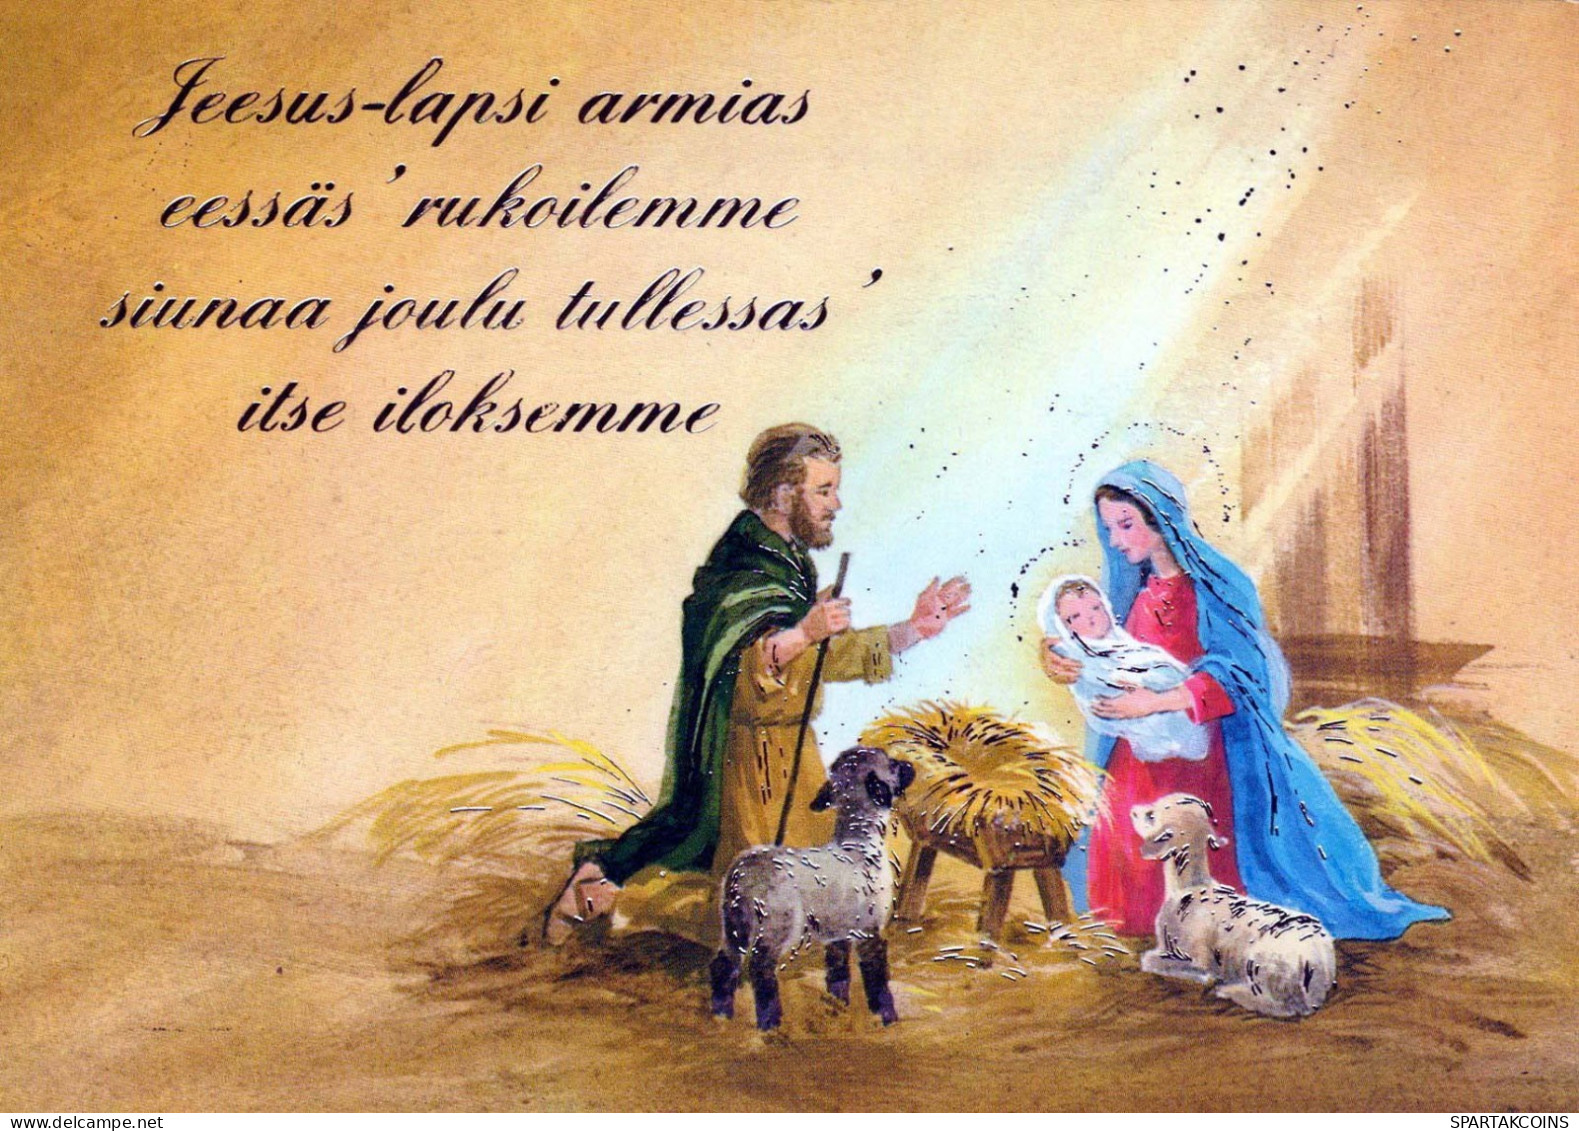 Vergine Maria Madonna Gesù Bambino Natale Religione #PBB640.IT - Vierge Marie & Madones